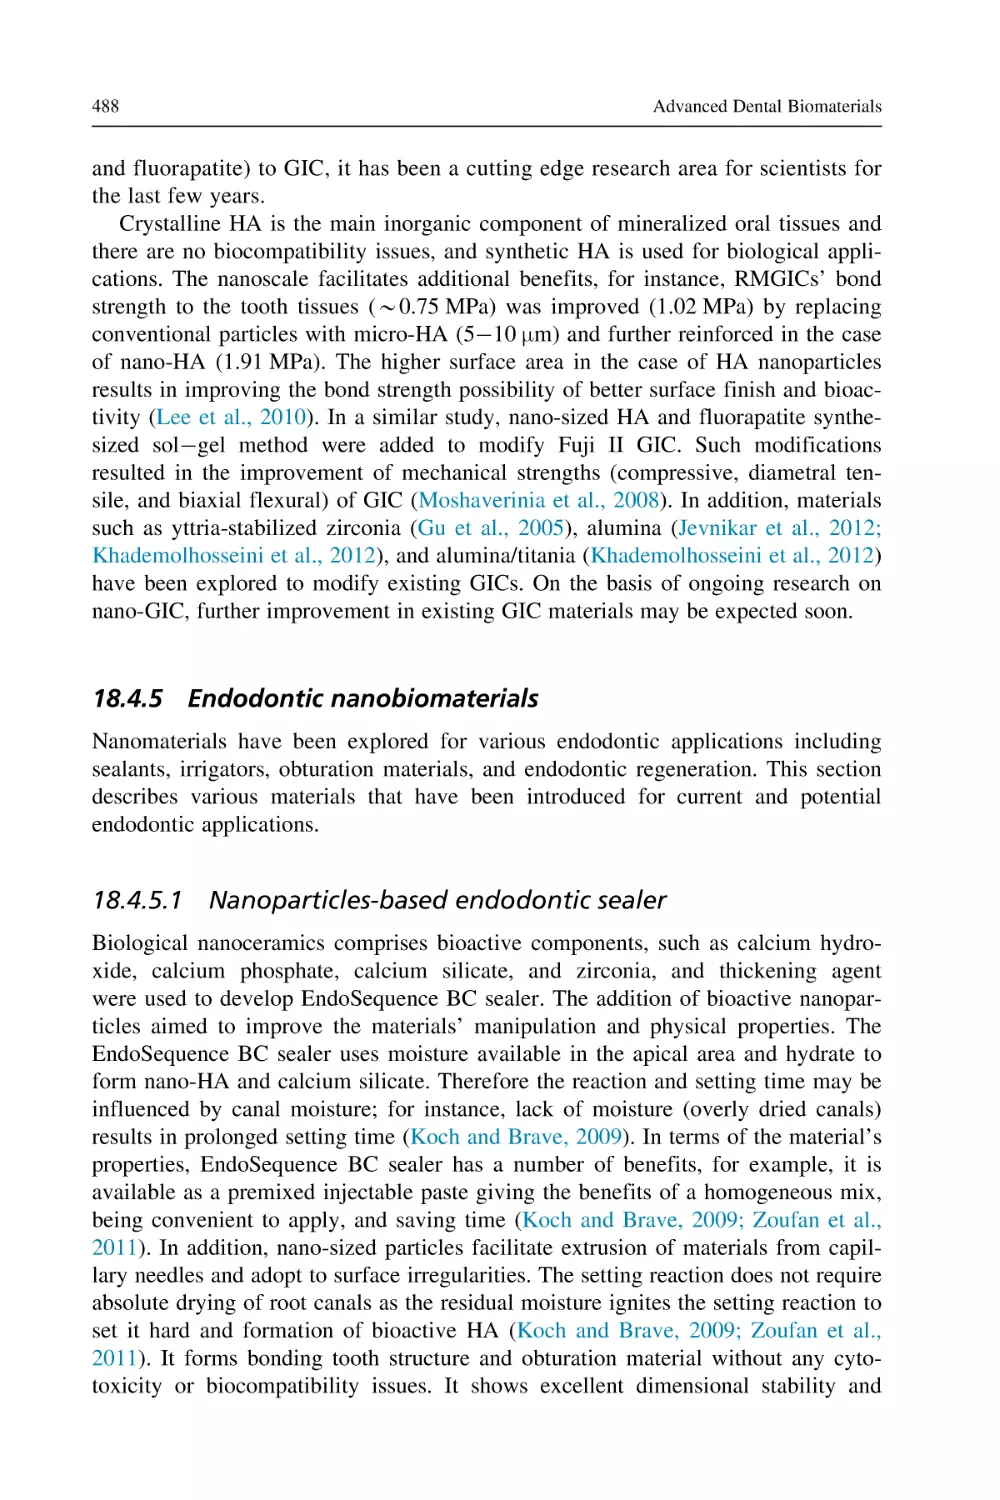 18.4.5 Endodontic nanobiomaterials
18.4.5.1 Nanoparticles-based endodontic sealer